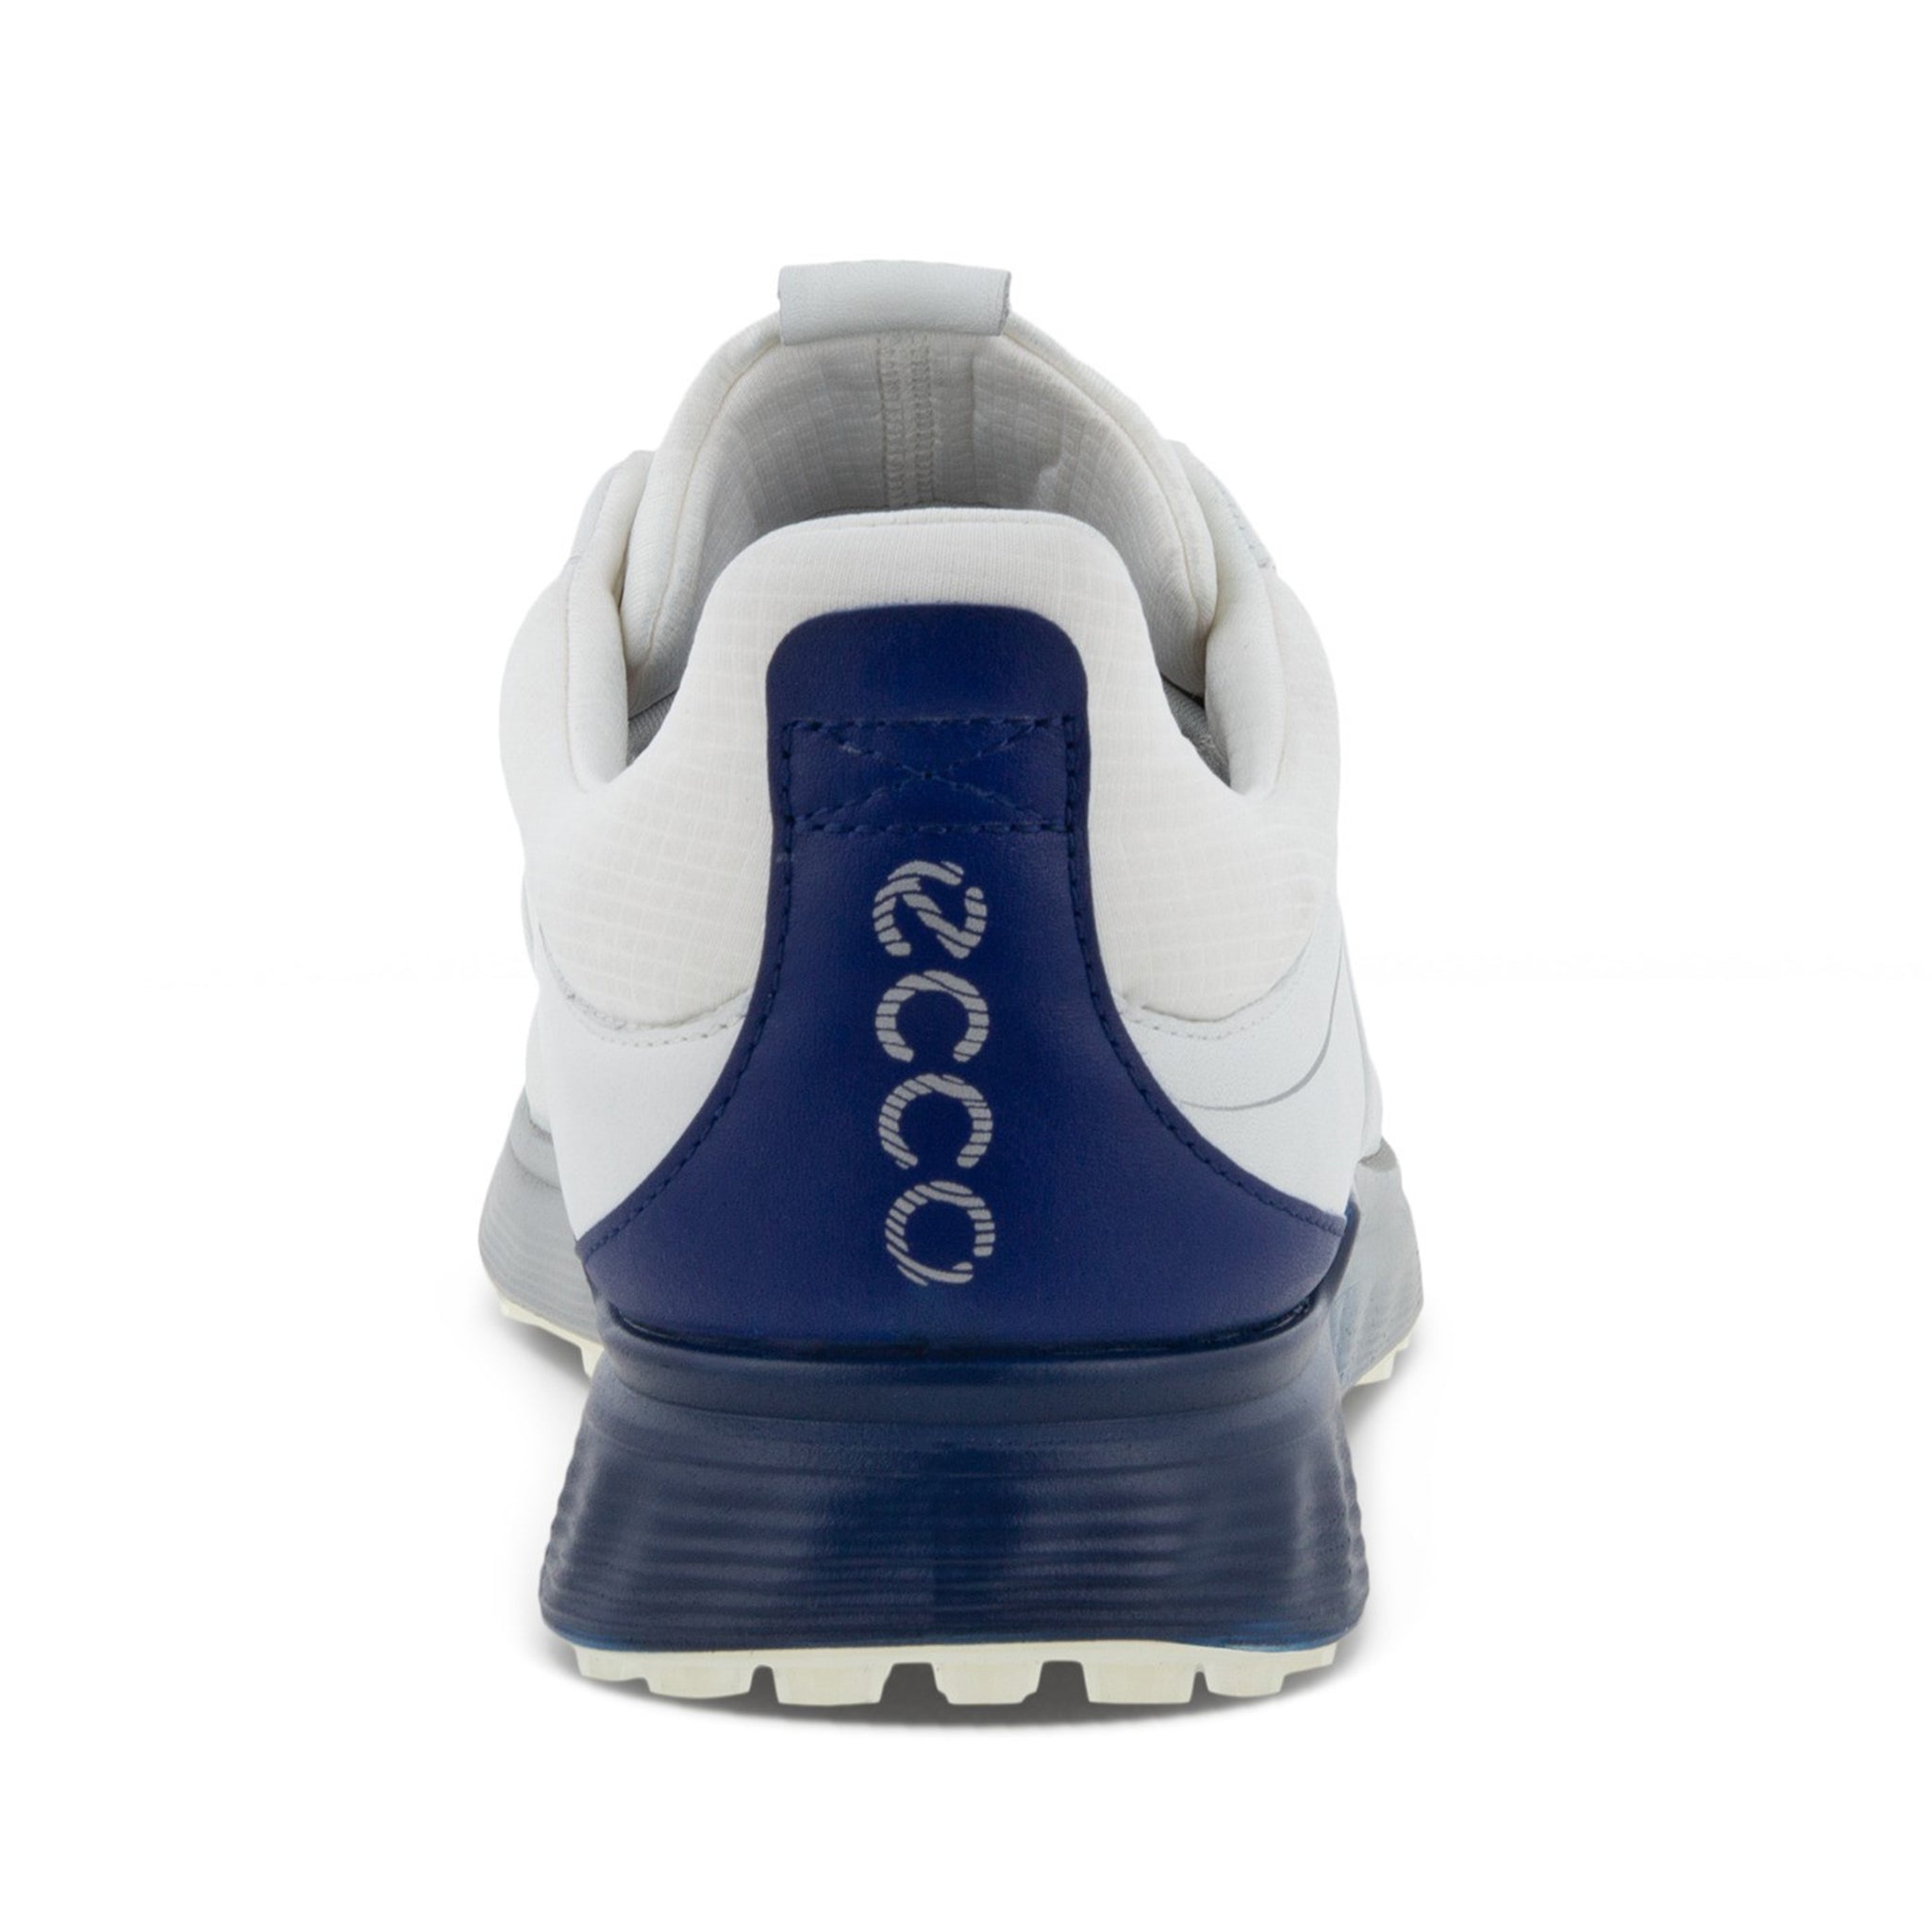 ecco-s-three-gore-tex-golf-shoes-102954-white-blue-depths-bright-white-60616